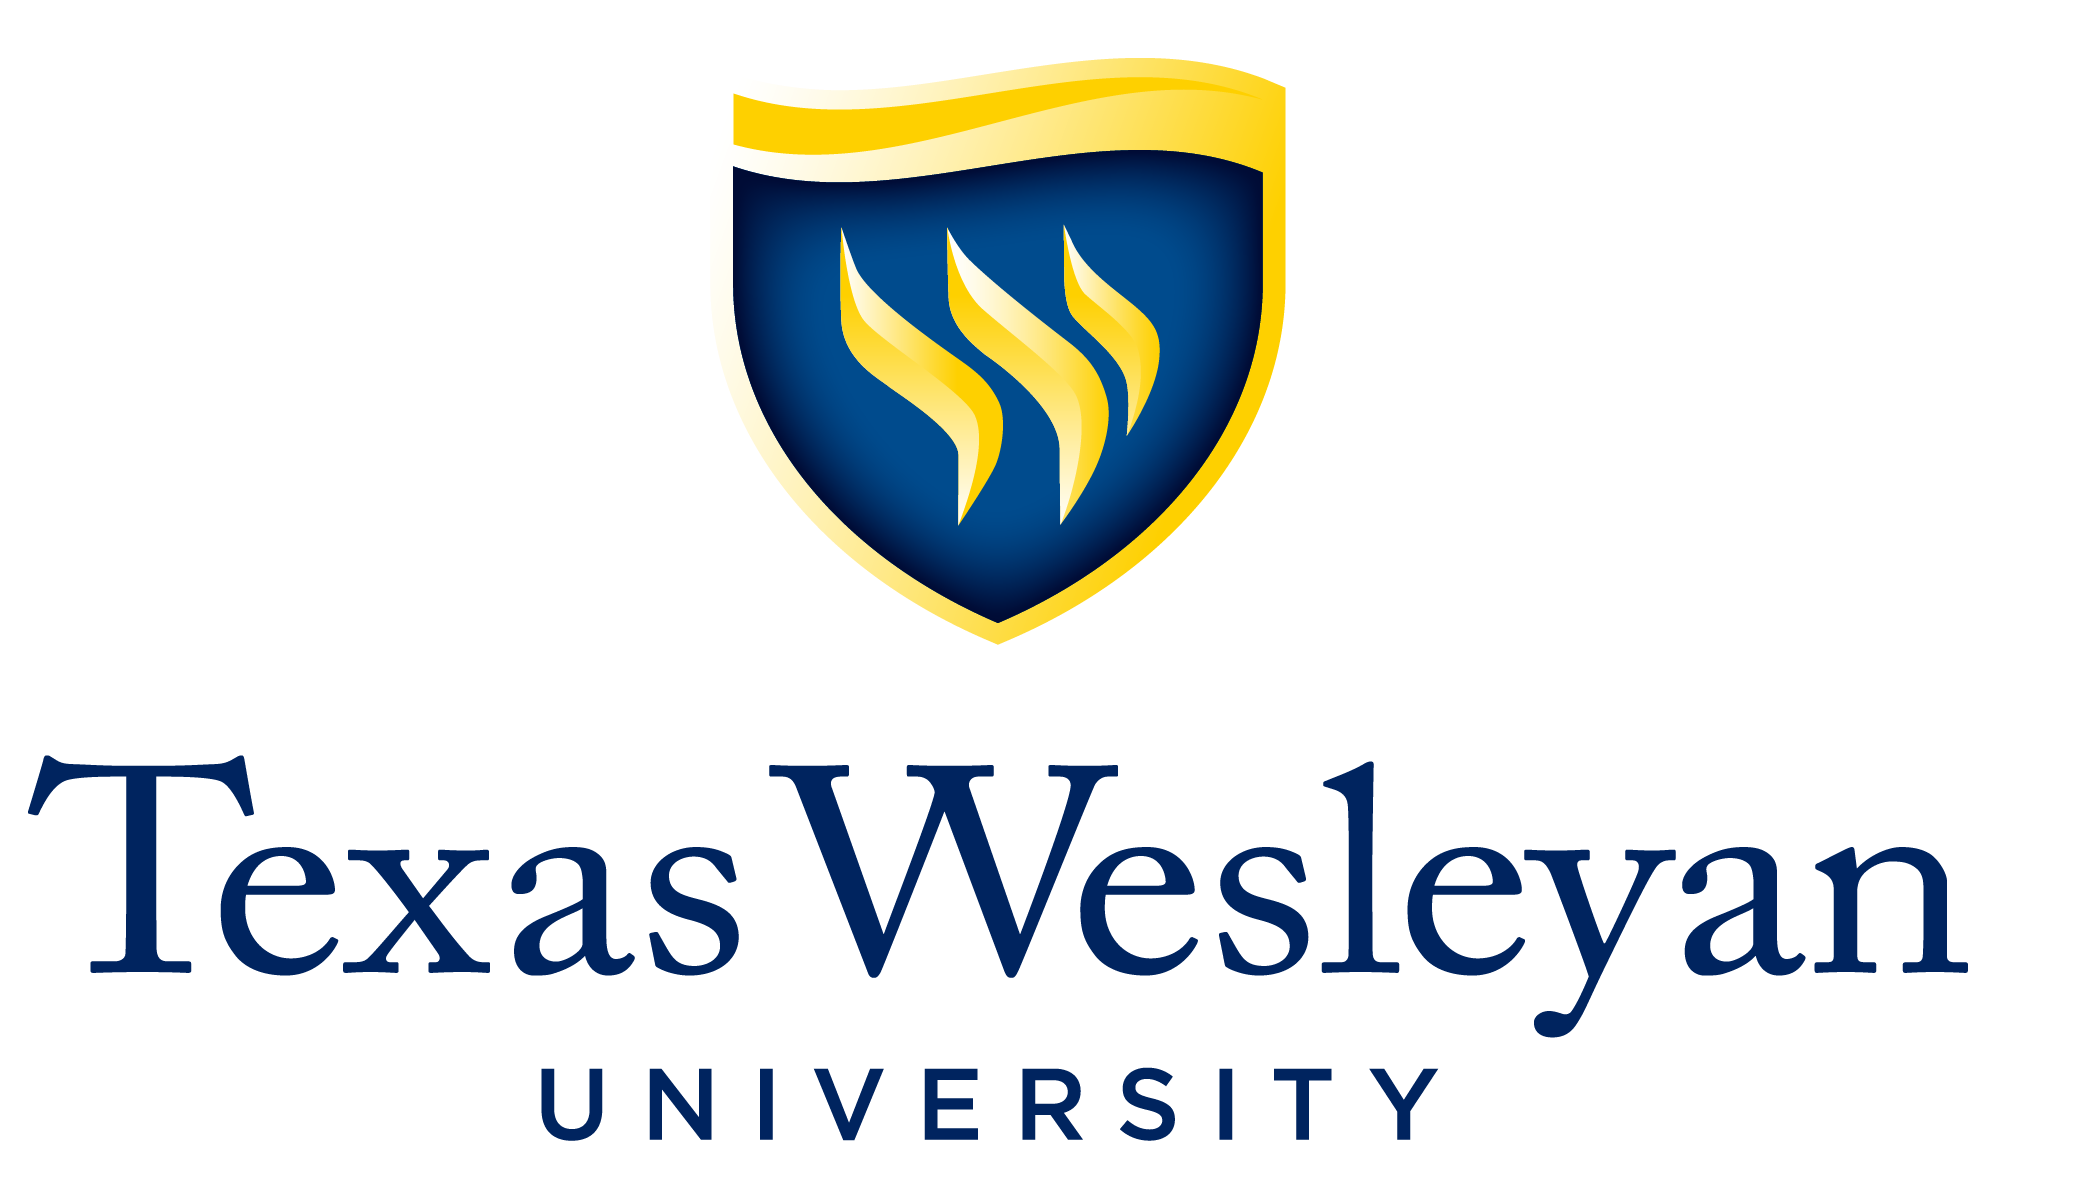 Texas Wesleyan logo